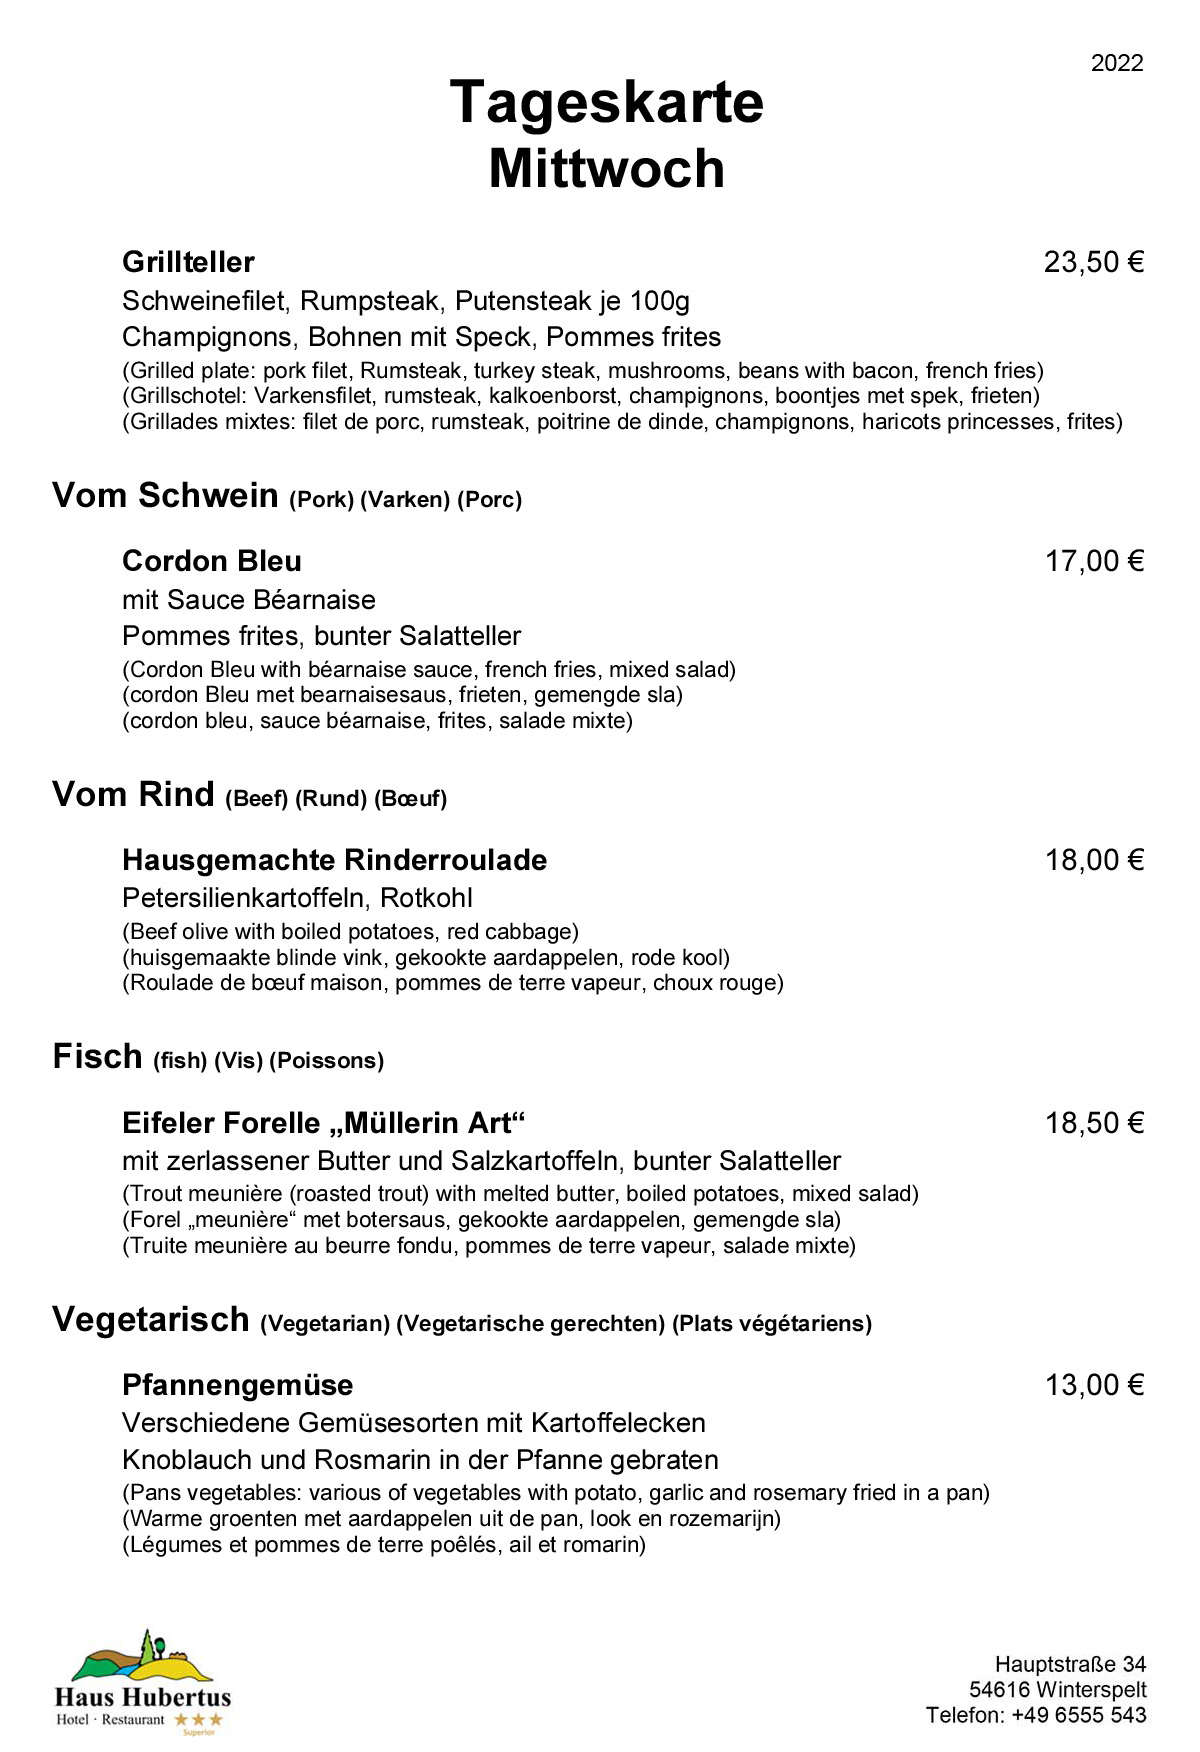 Hotel - Restaurant Haus Hubertus - Speisekarte 07/2022 - Tageskarte / Mittwoch